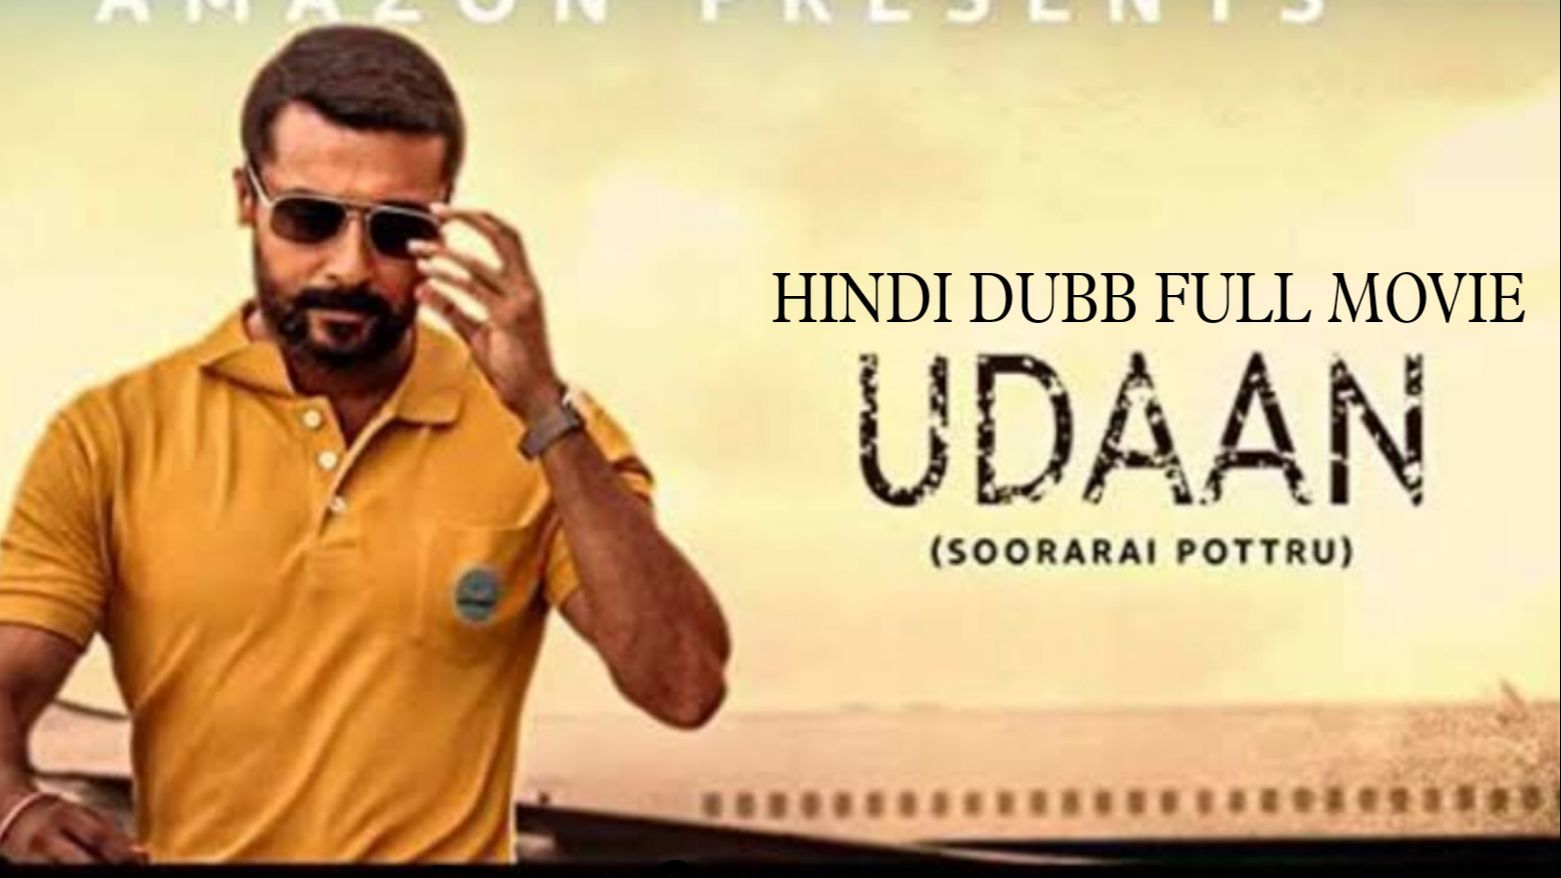 Udaan south Hindi dubb movie 2020 - Bilibili